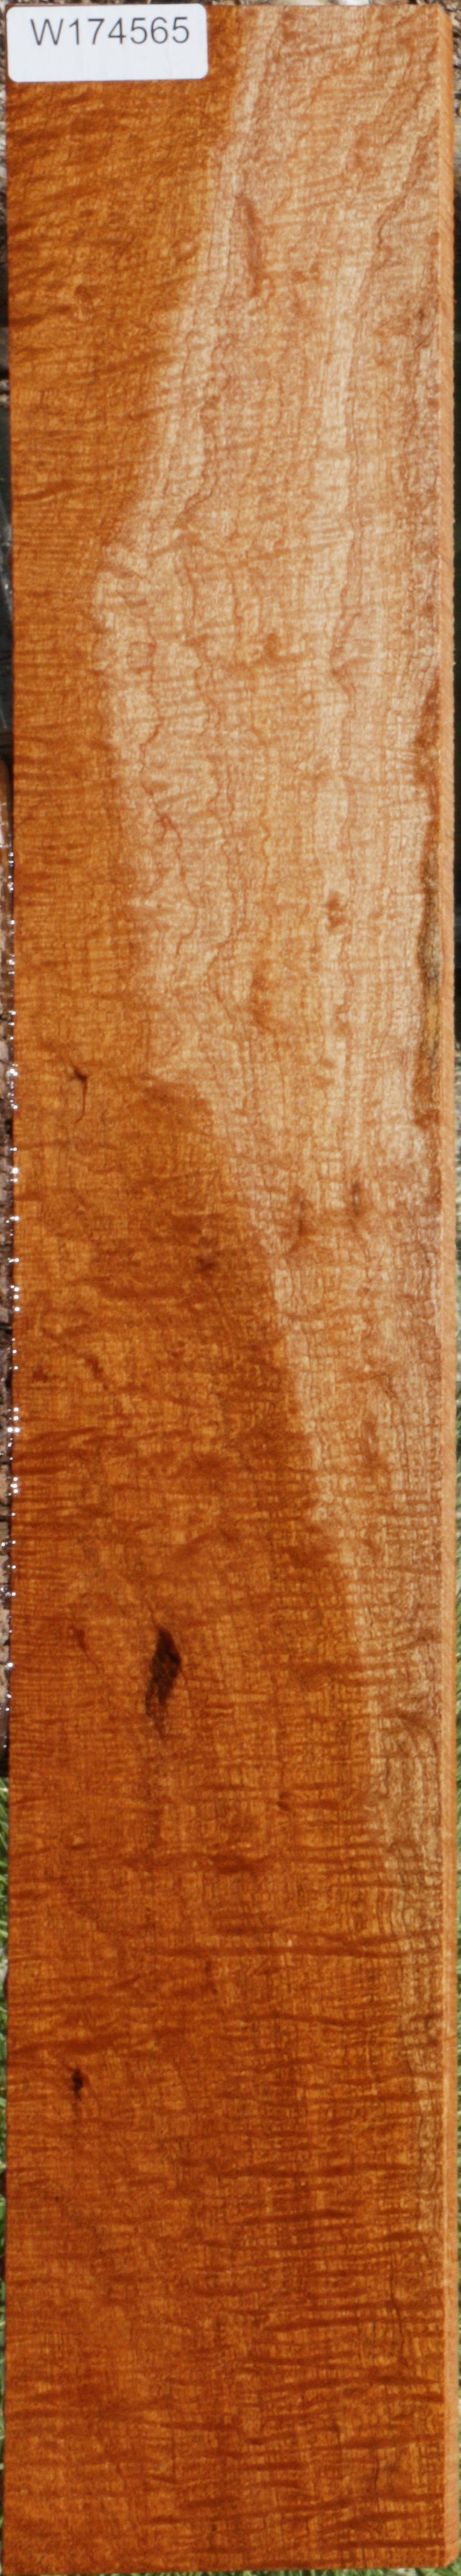 Exhibition Honduras Mahogany Instrument Lumber